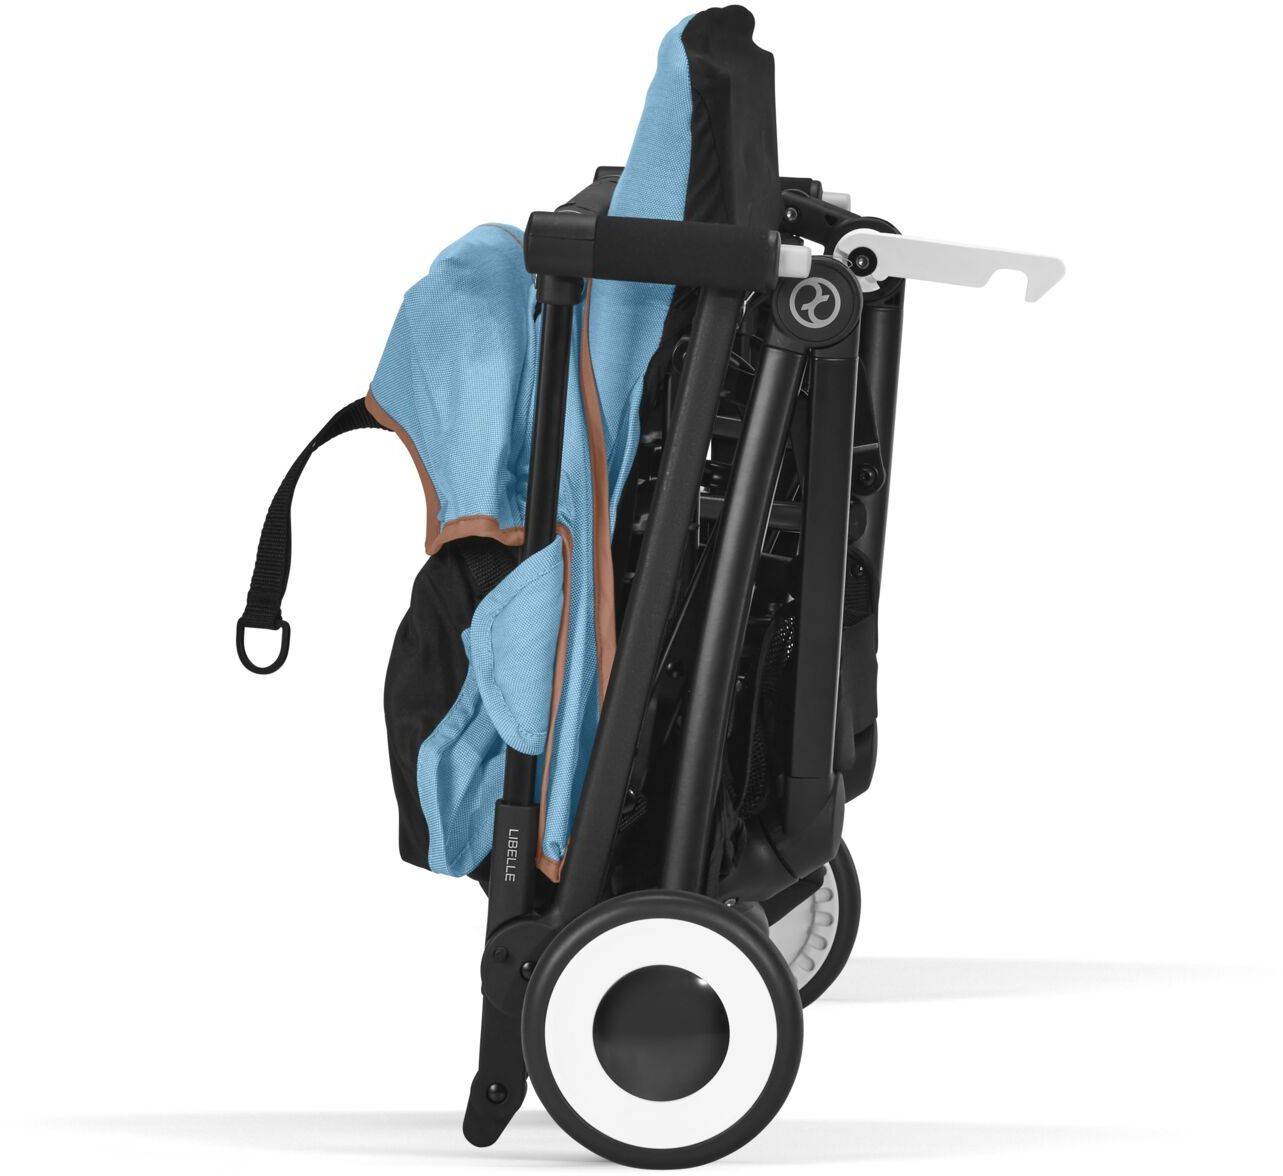 Cybex Libelle travel stroller review